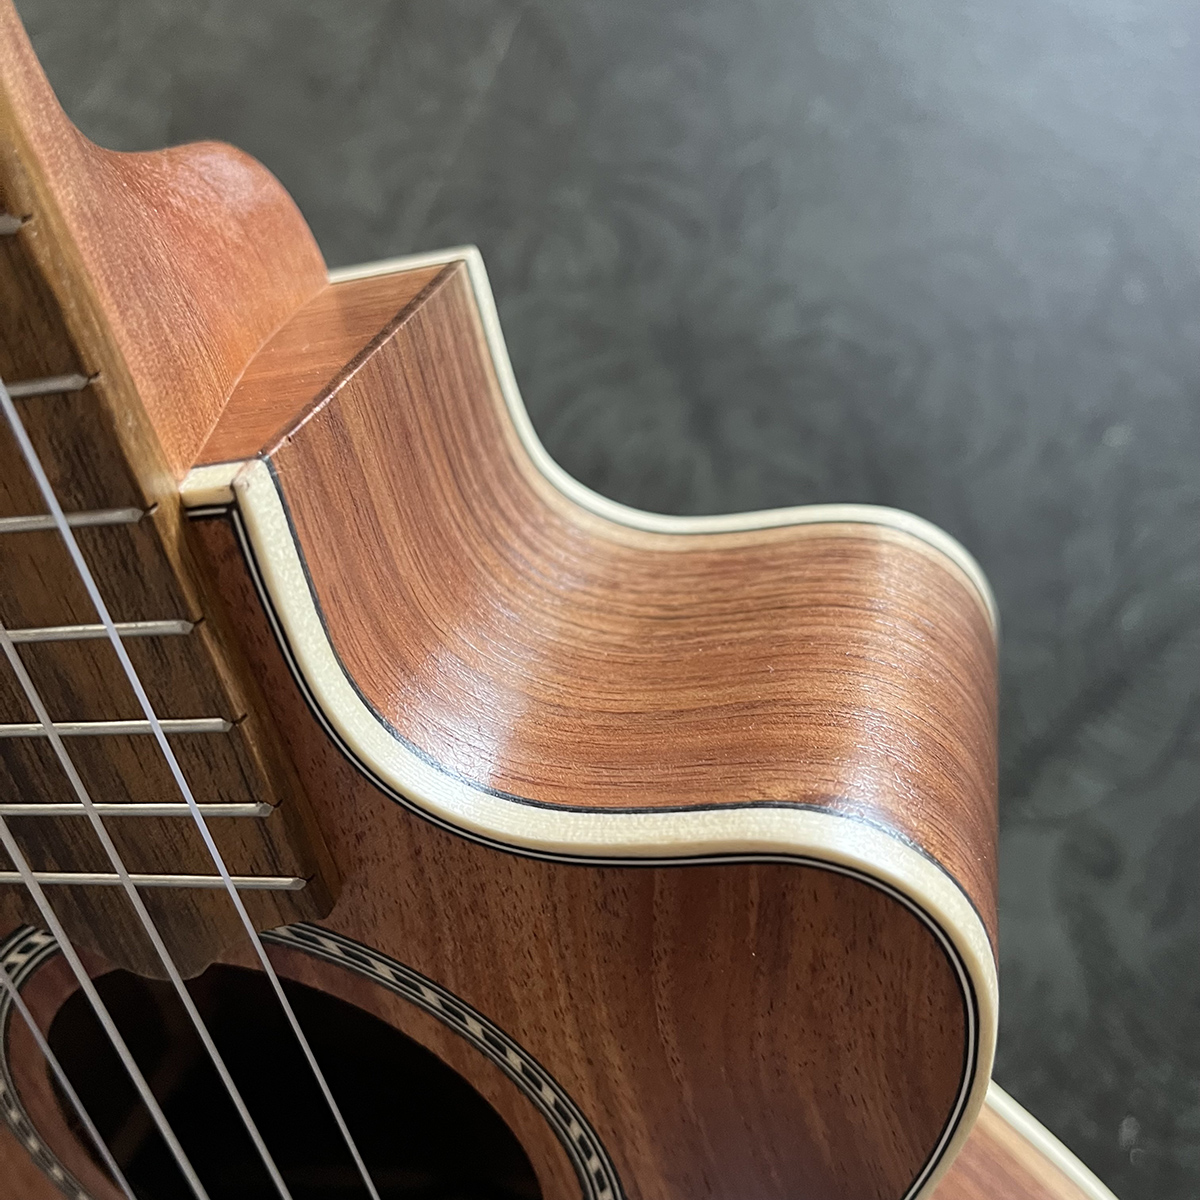 APC tenor ukulele met pickup